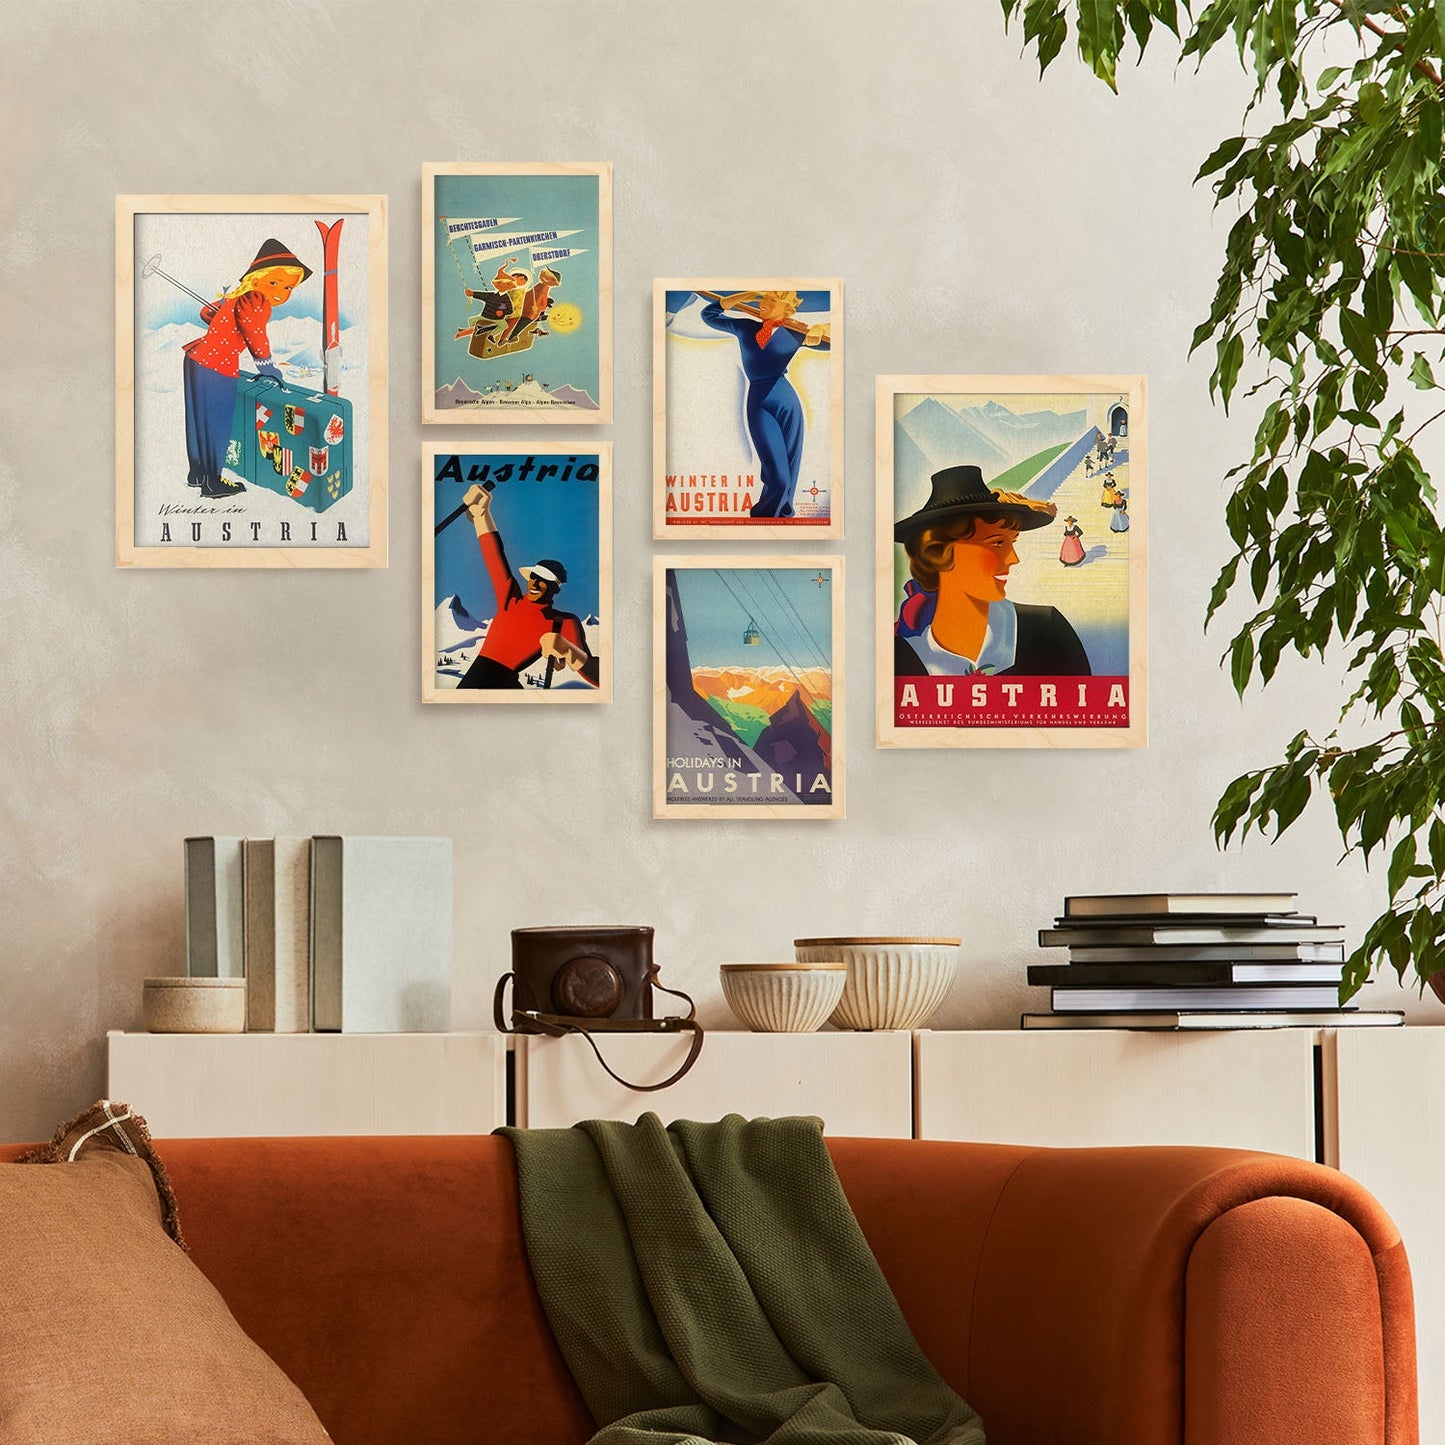 Nacnic paises estados unidos vintage. Aesthetic Wall Art Prints for Bedroom or Living Room Design.